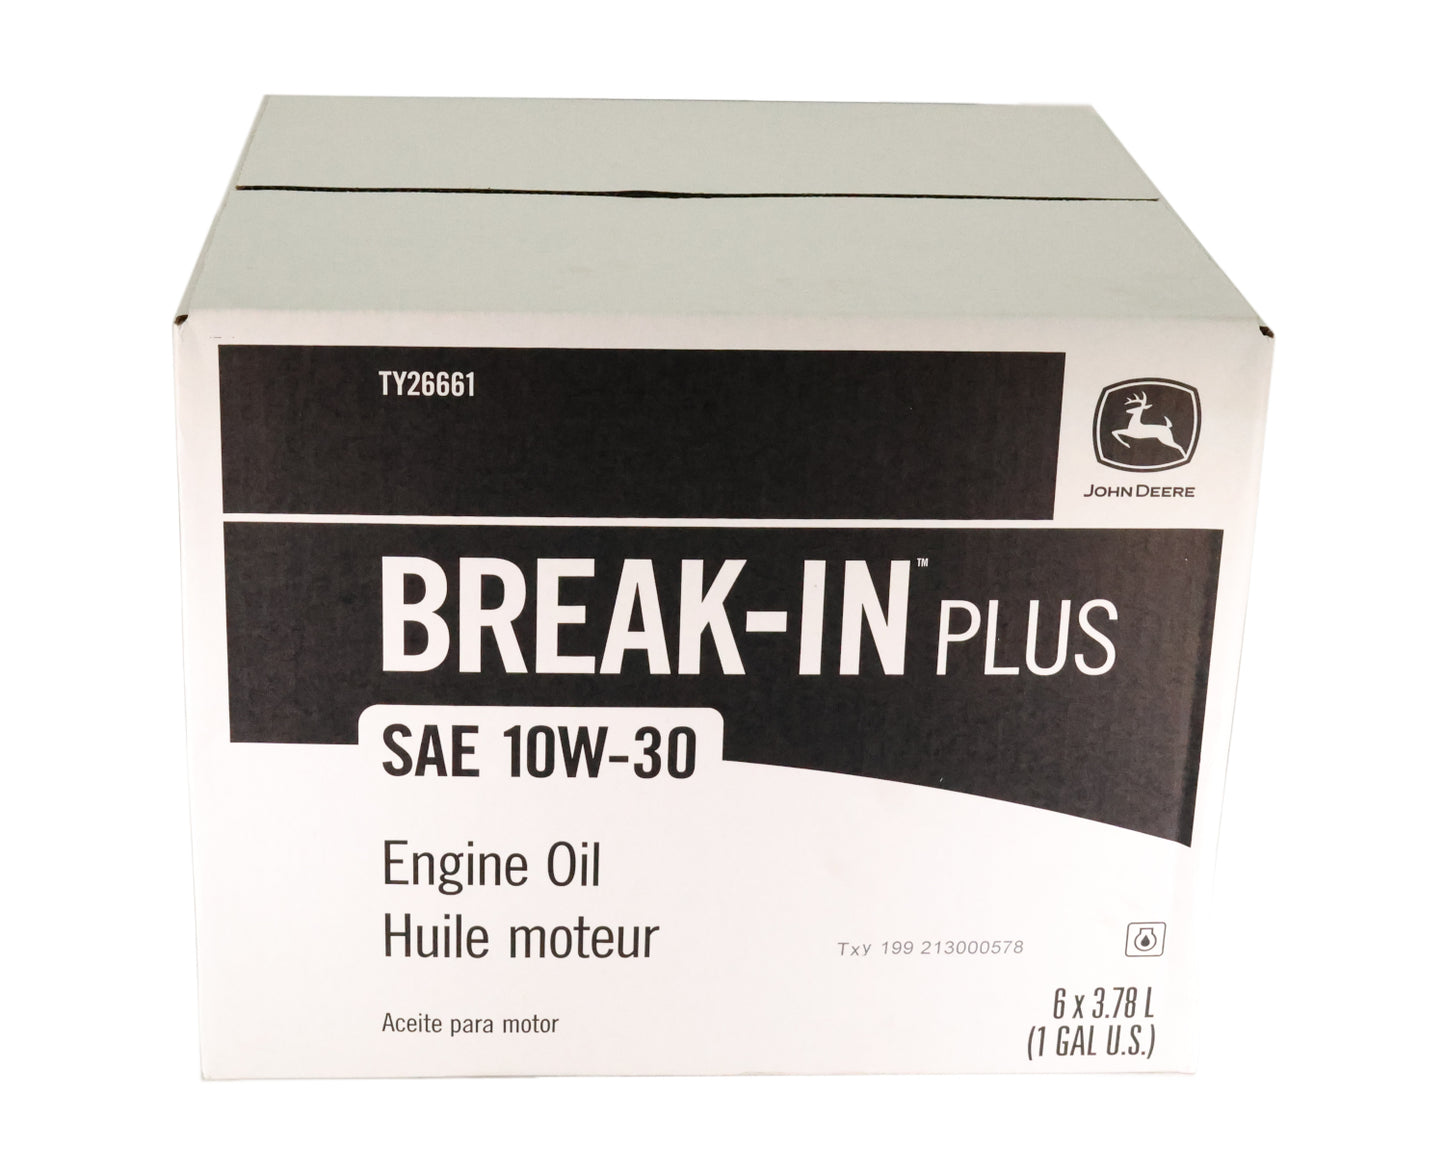 John Deere Original Equipment (6 Gallons) Break-In Plus Engine Oil - TY26661